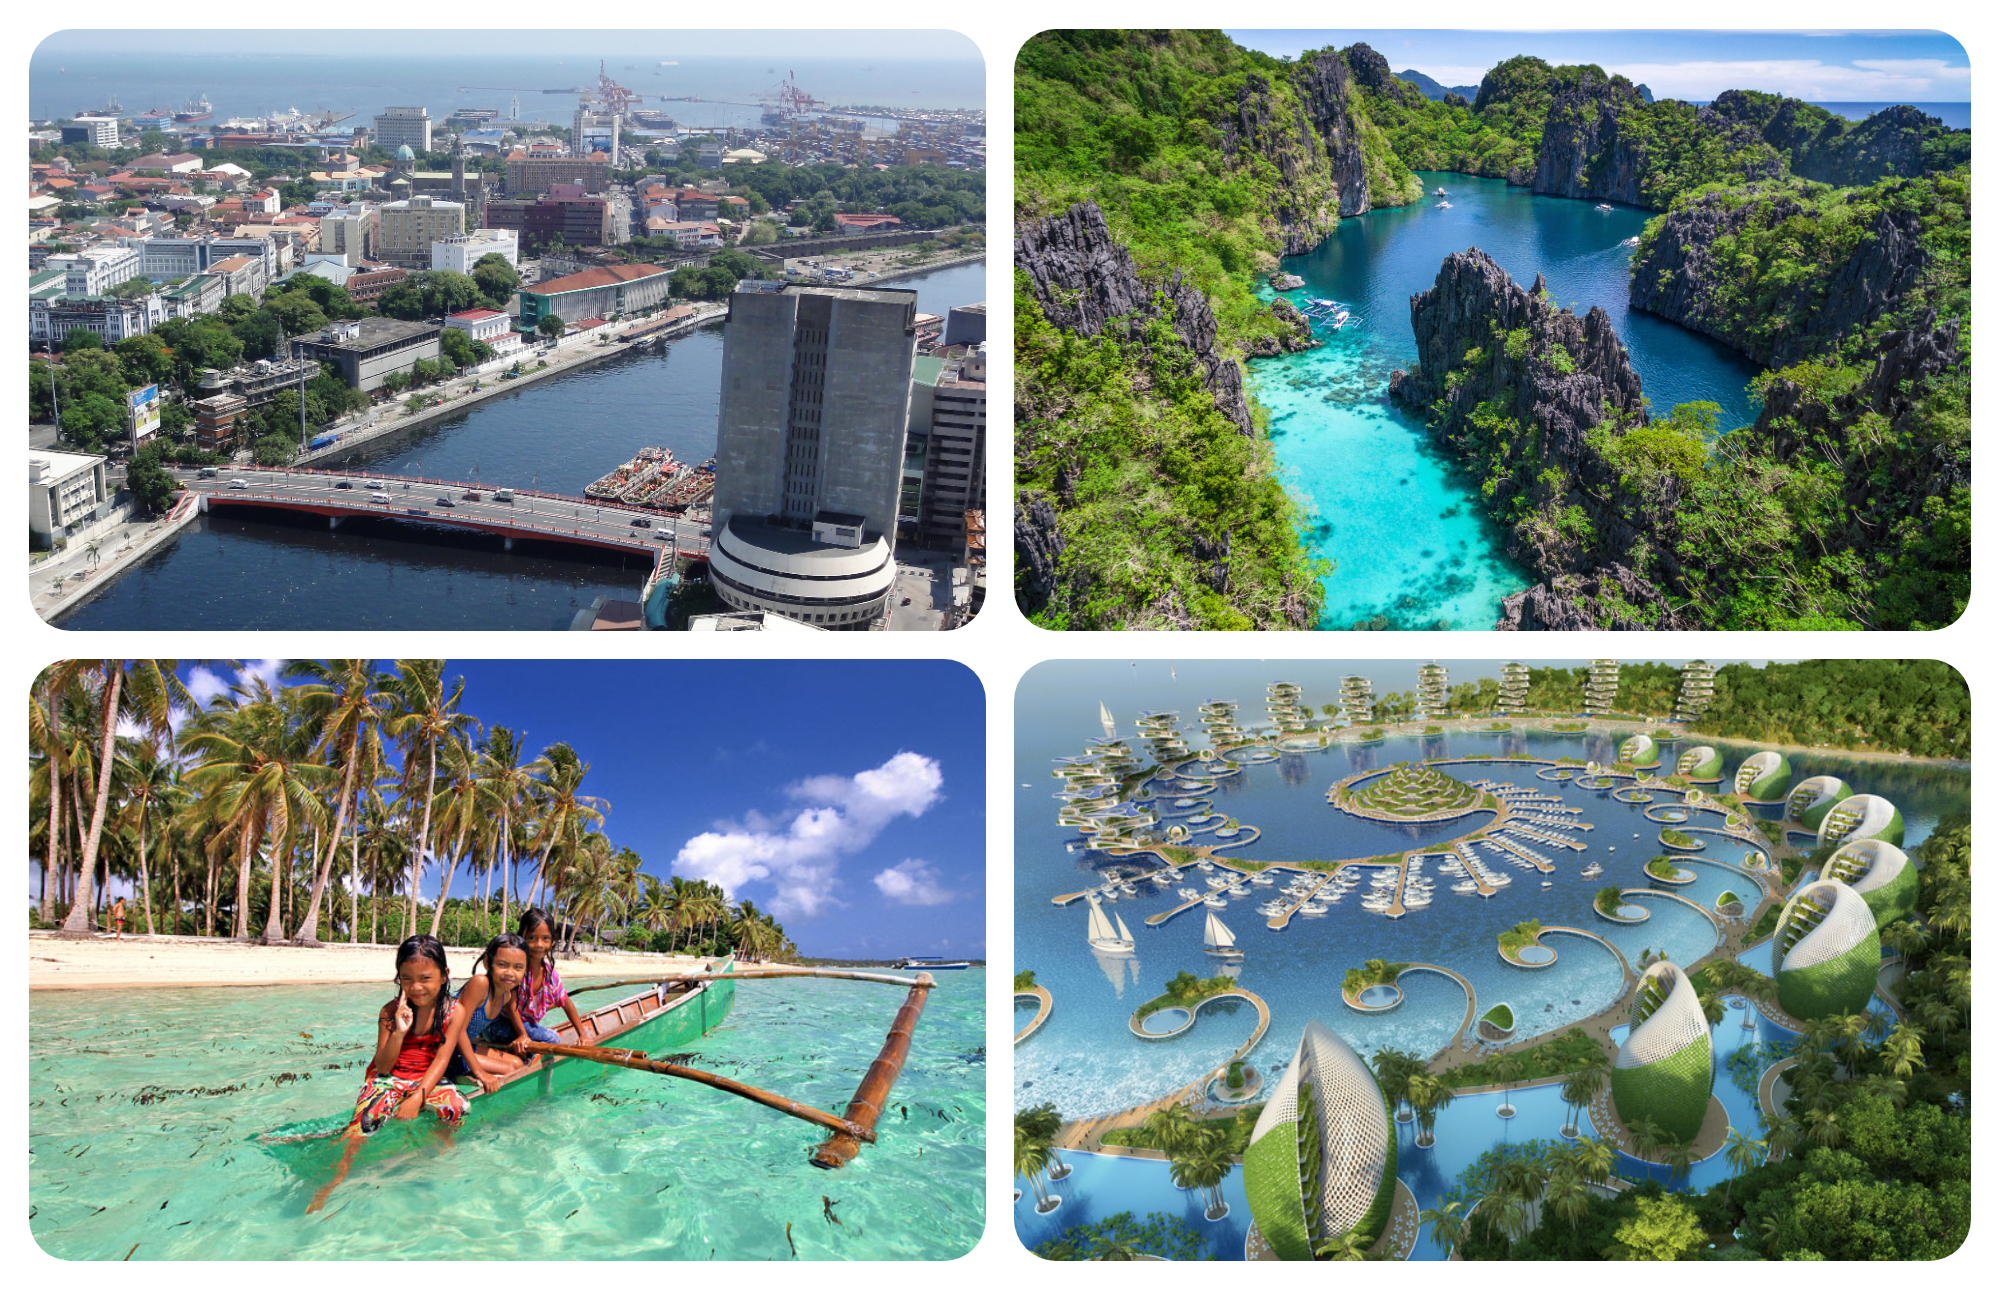 philippine tourism collage